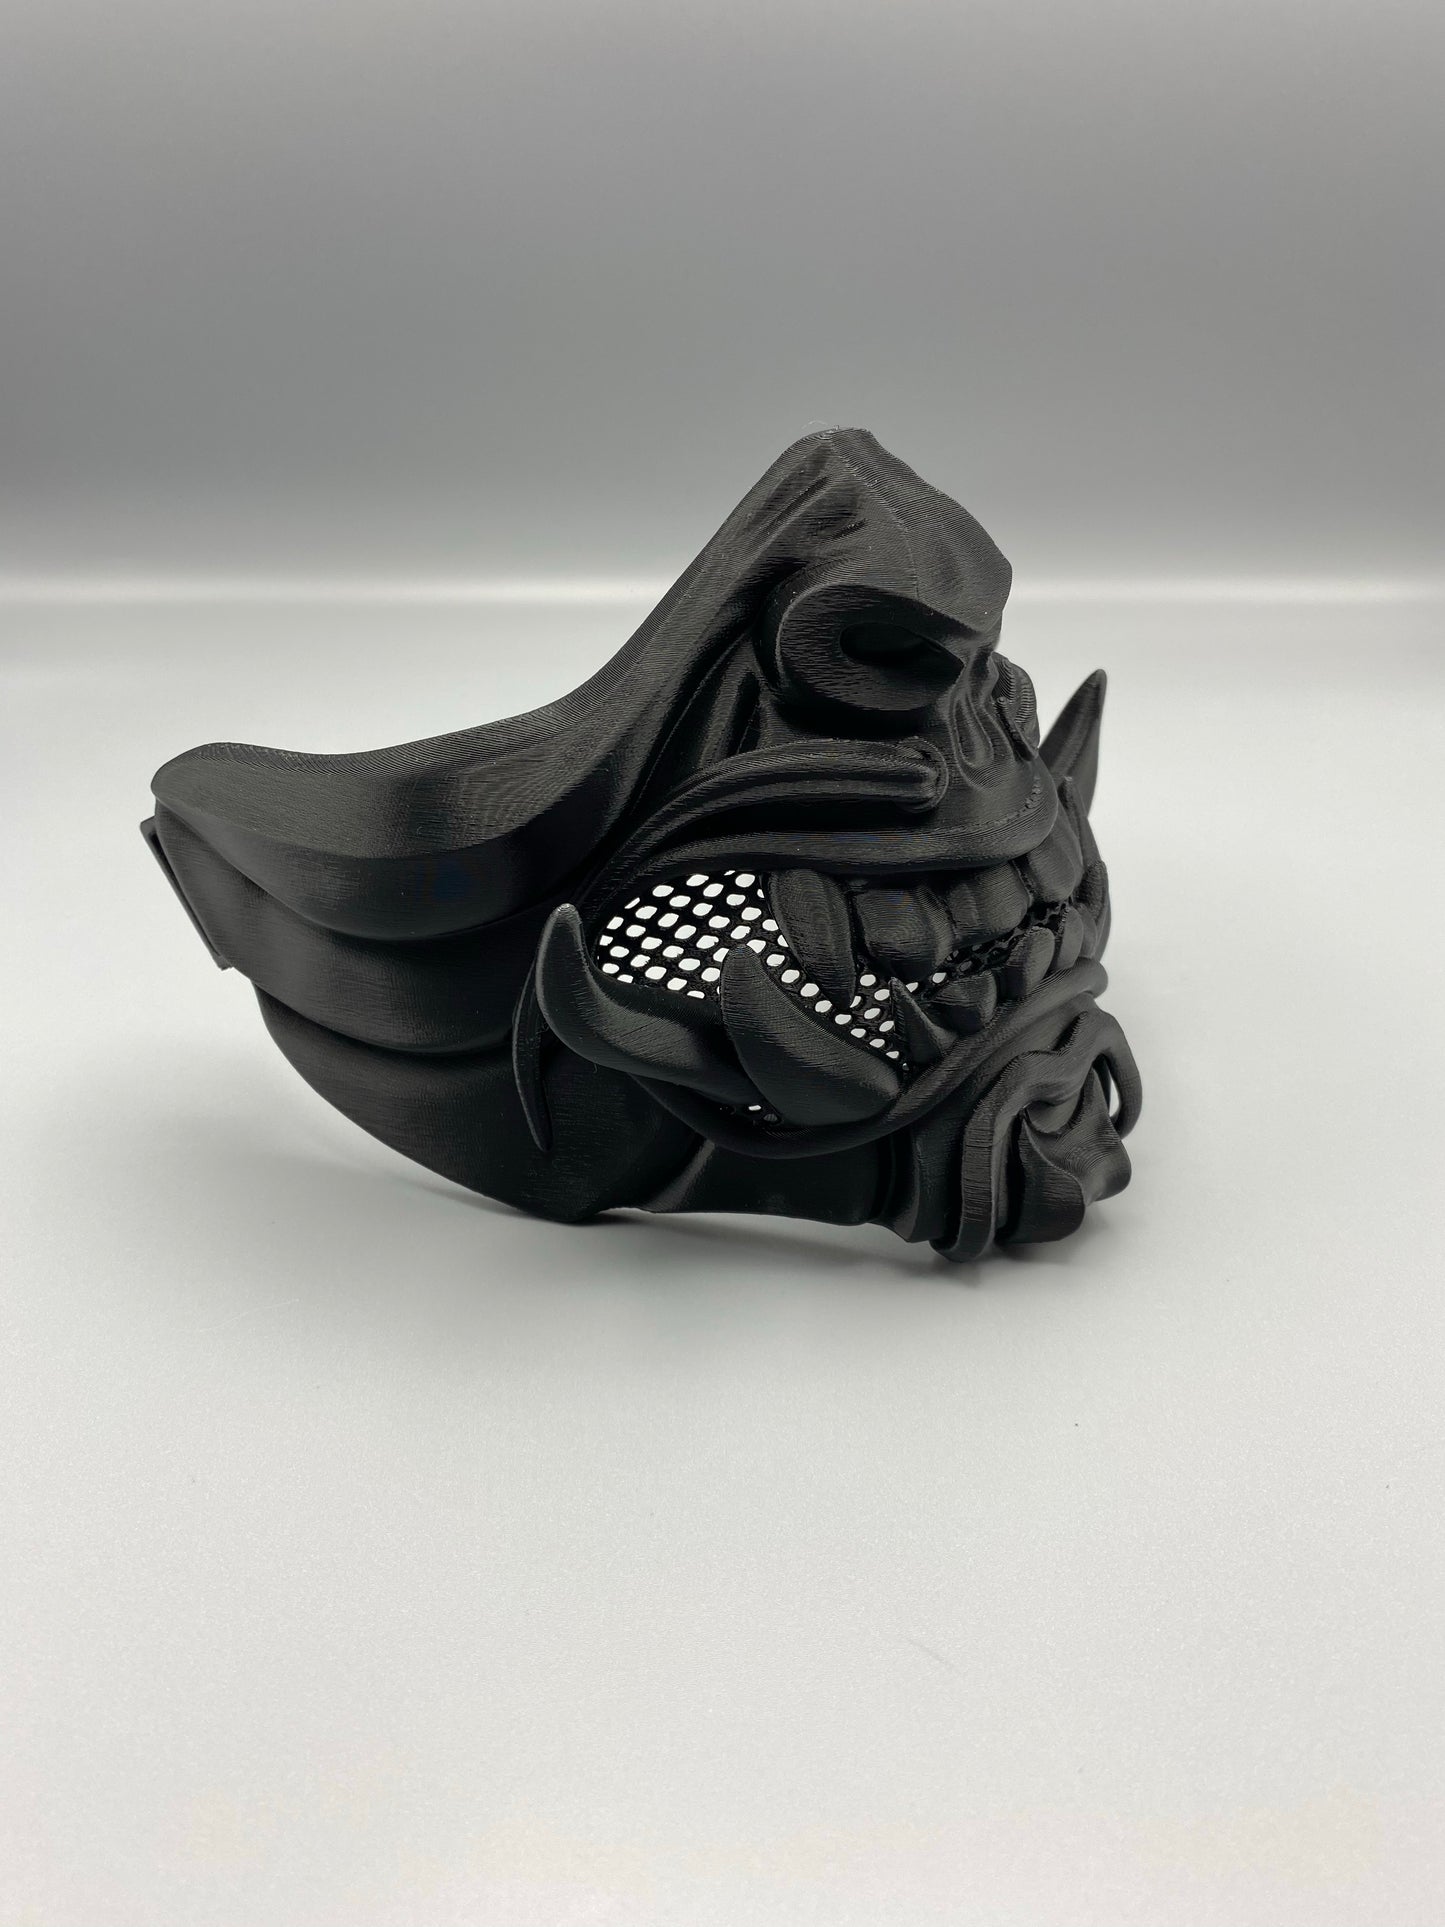 Samurai Oni Half-mask